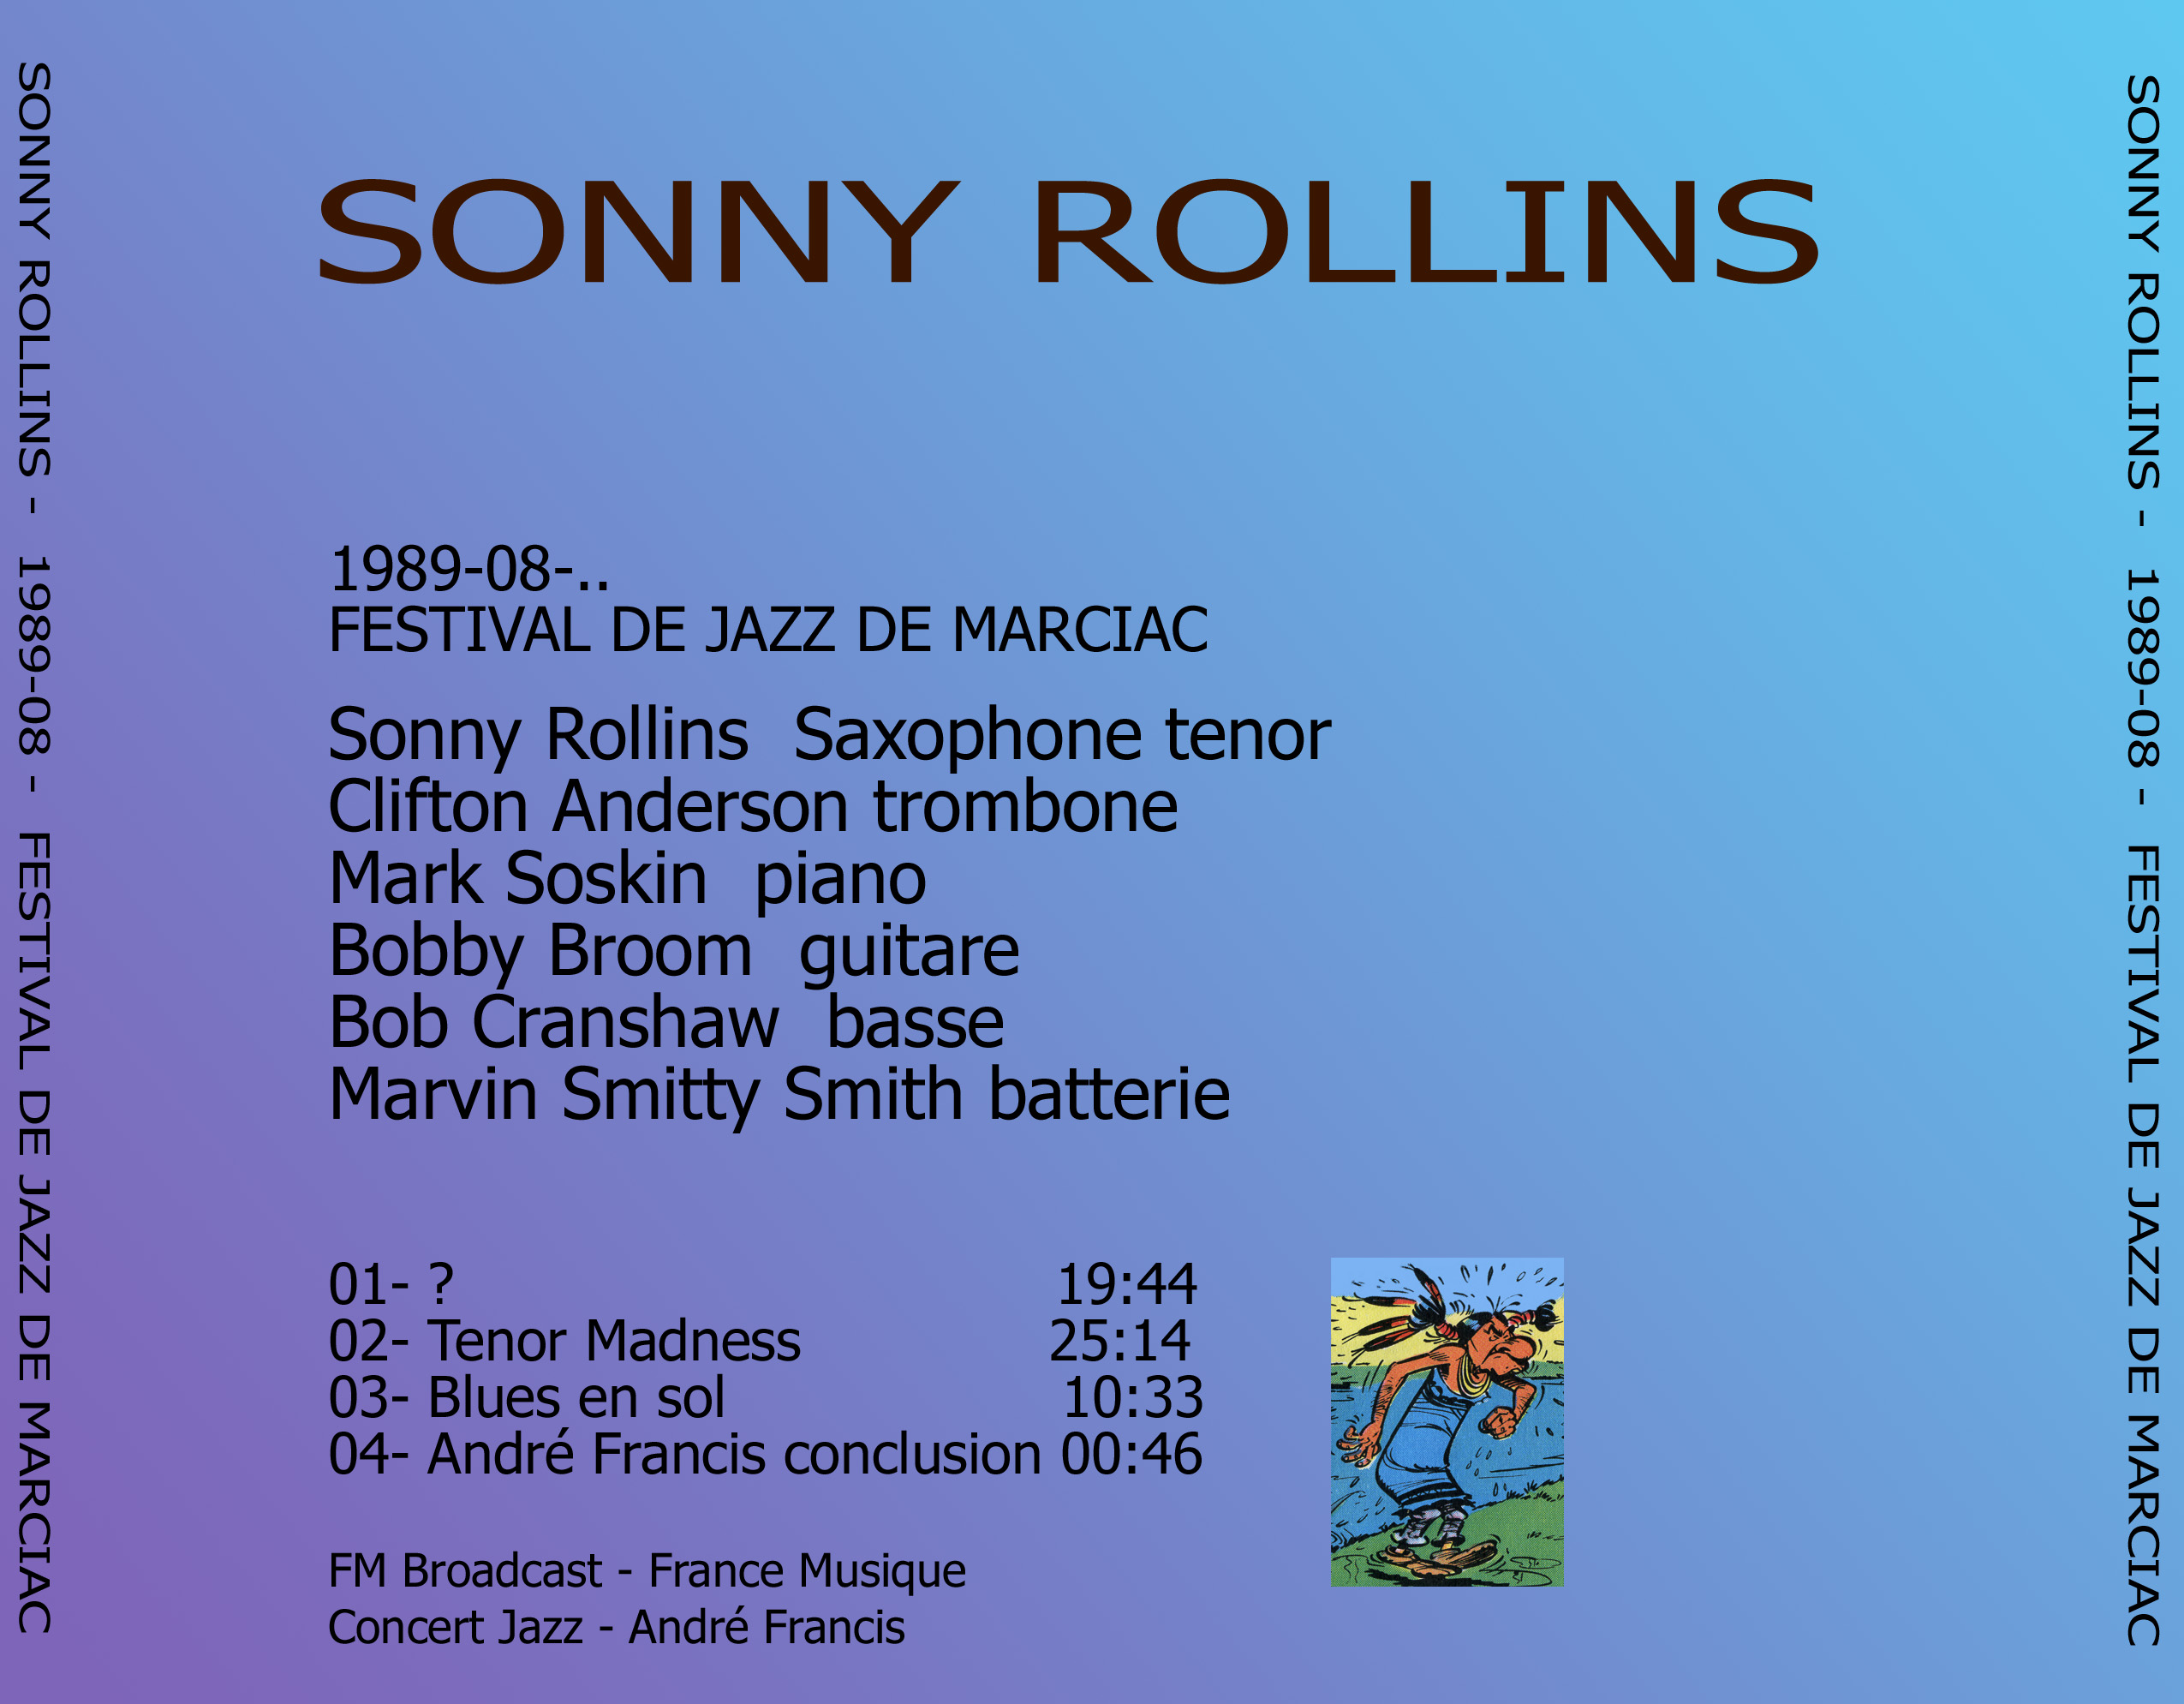 SonnyRollins1989-08FestivalJazzMarciacFrance (4).jpg